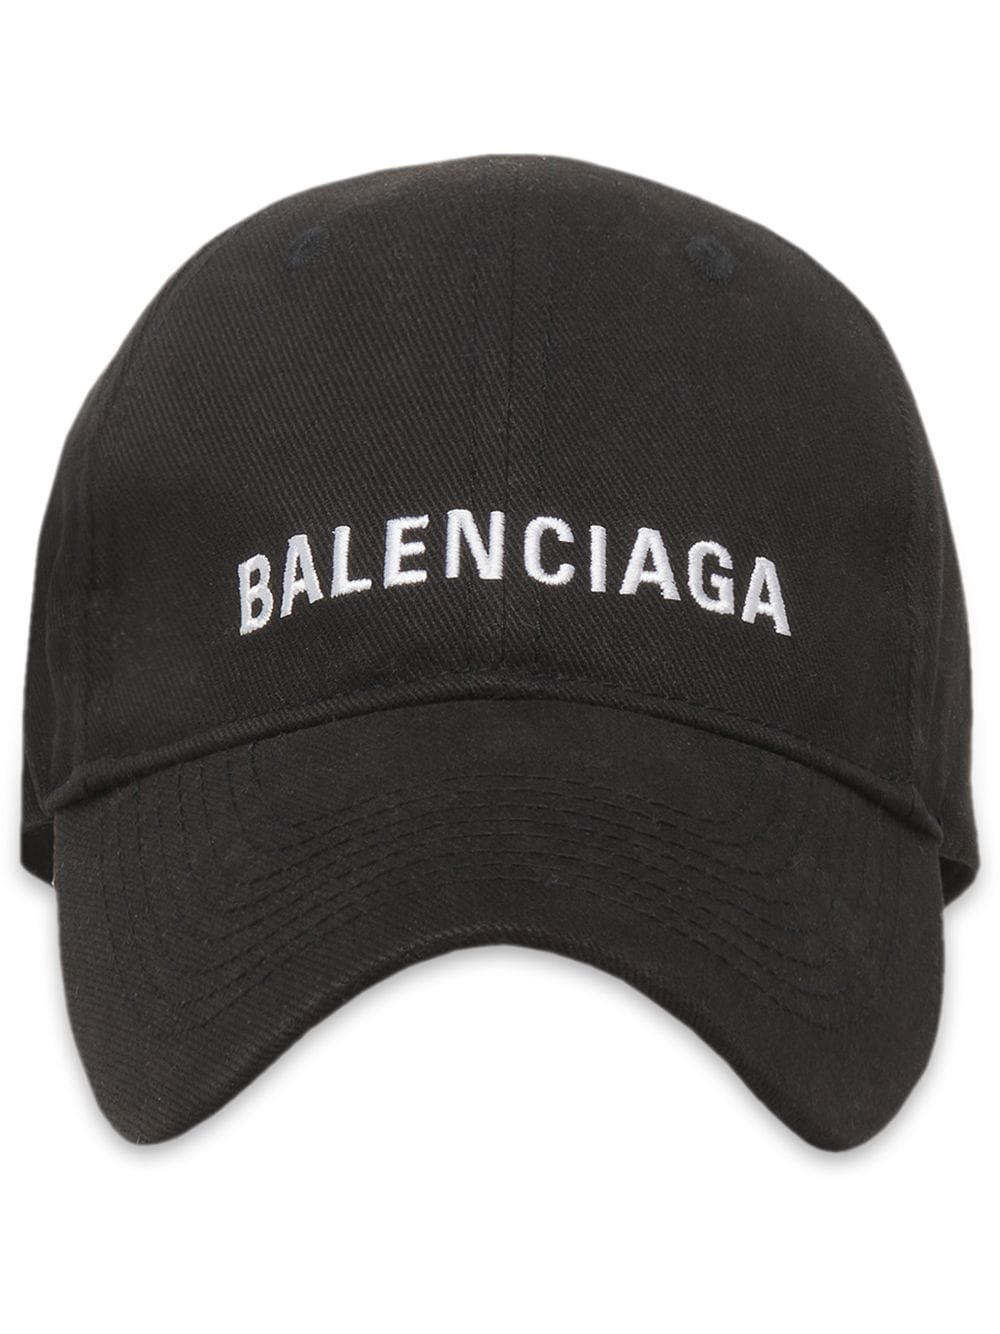 Balenciaga - embroidered logo baseball hat